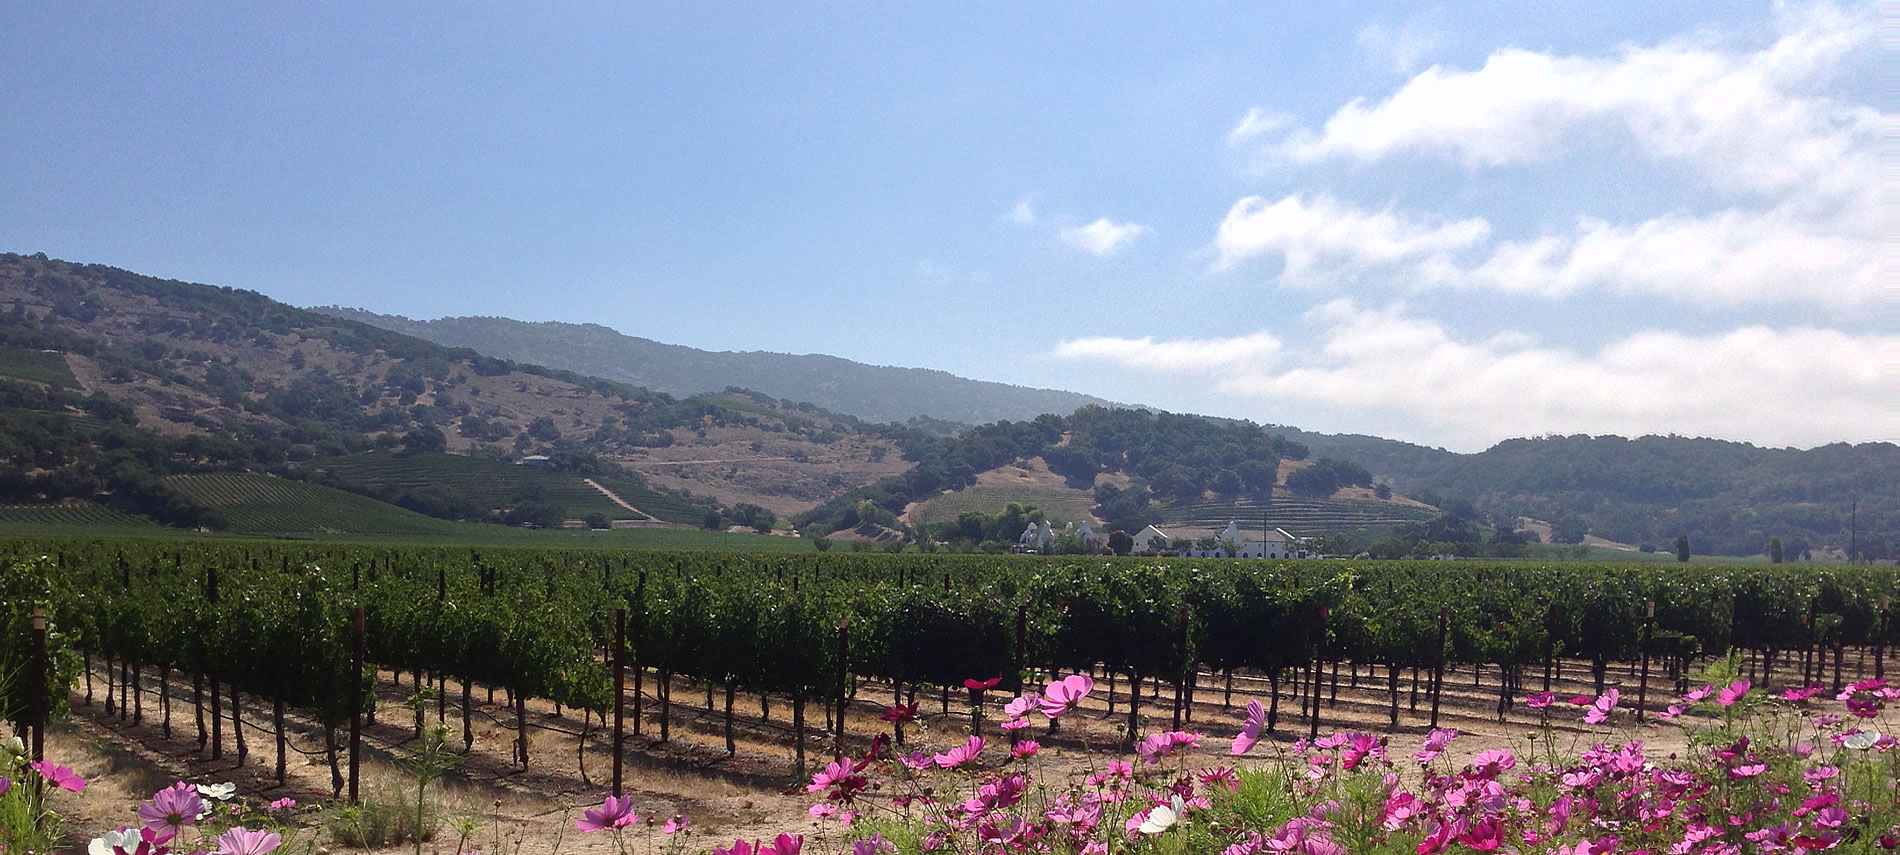 california wine country